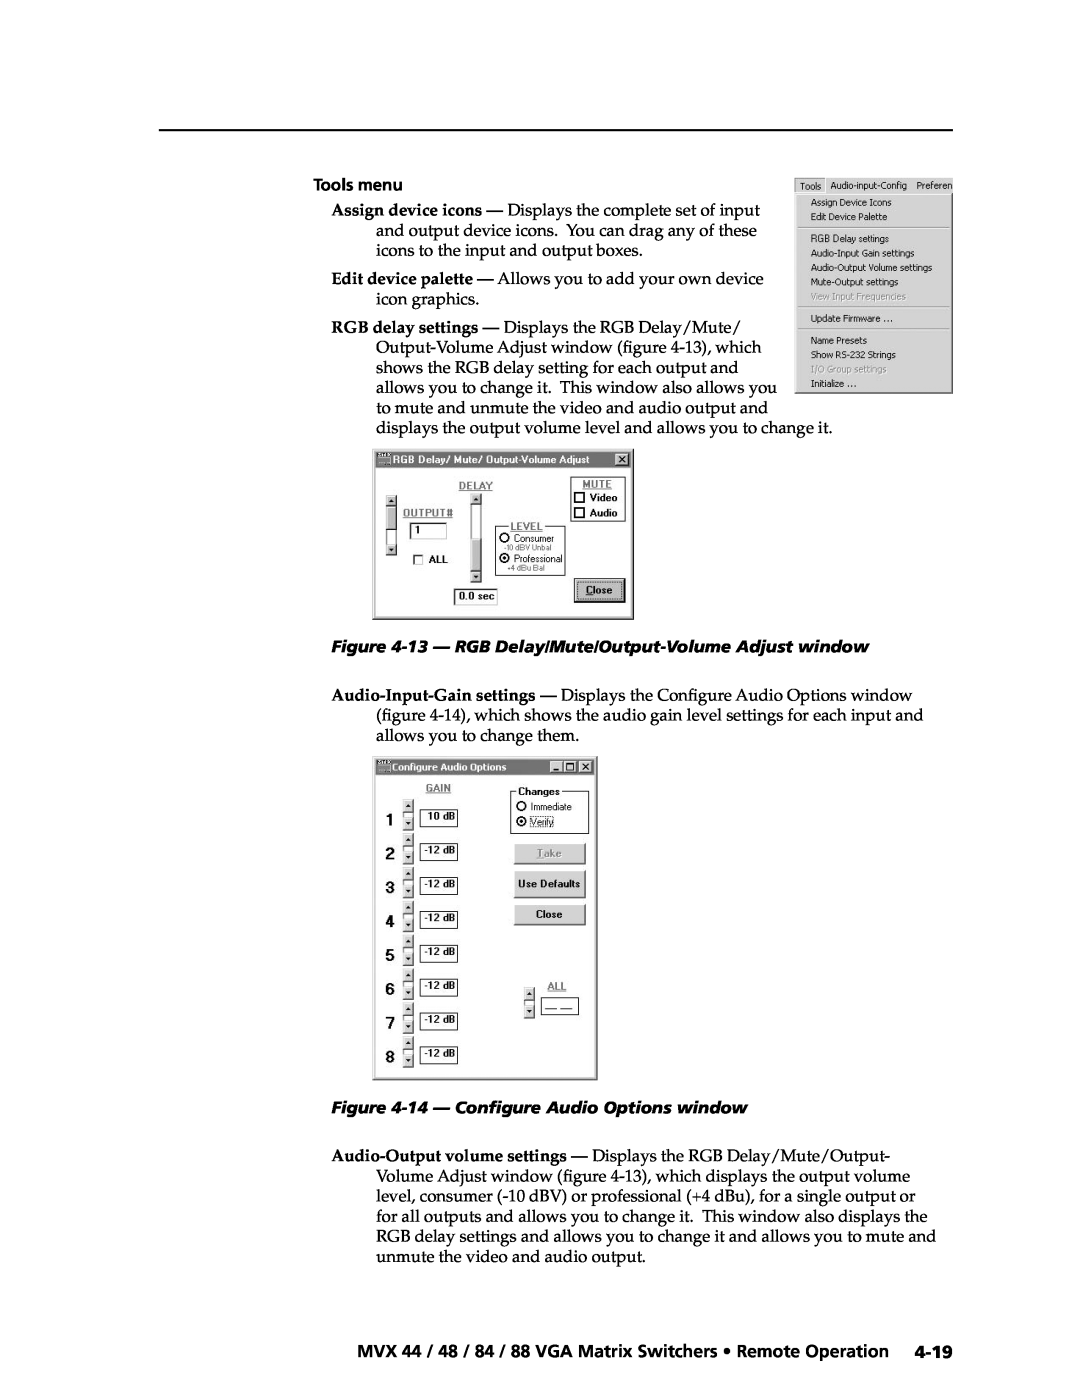 Extron electronic MVX 88 Series manual Tools menu, 13 - RGB Delay/Mute/Output-Volume Adjust window, Preliminary 